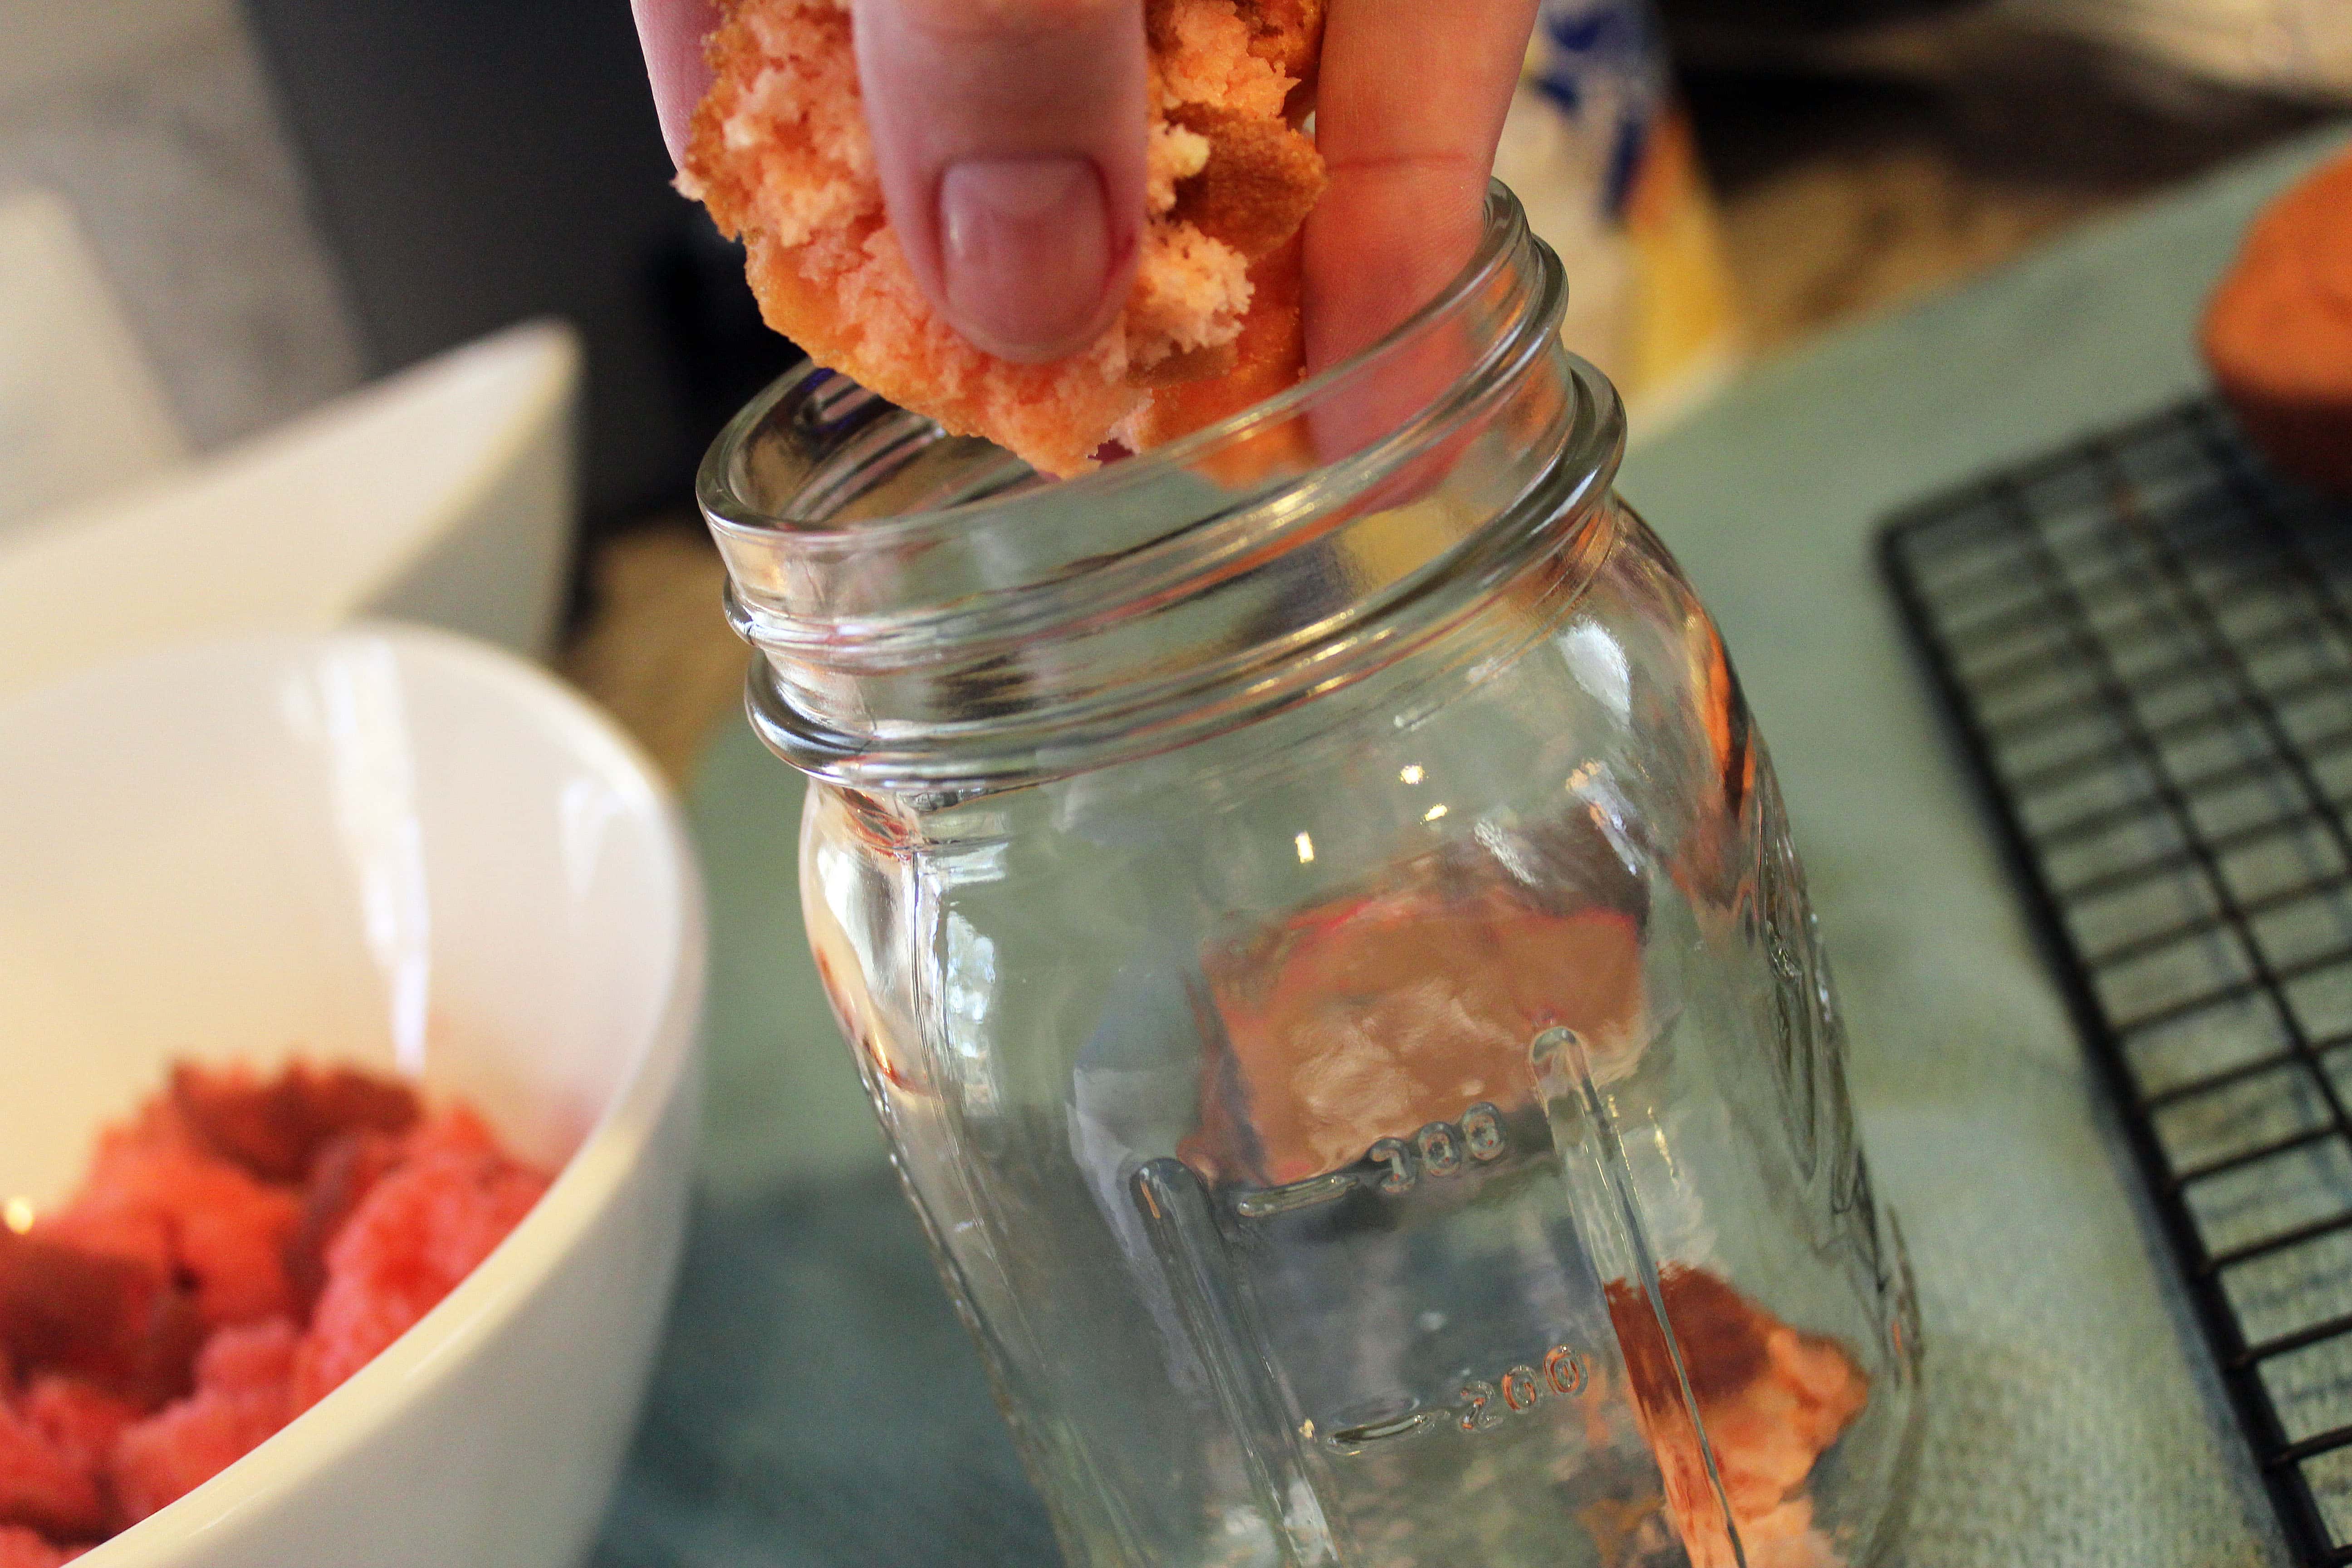 Add lightest layer to jar first